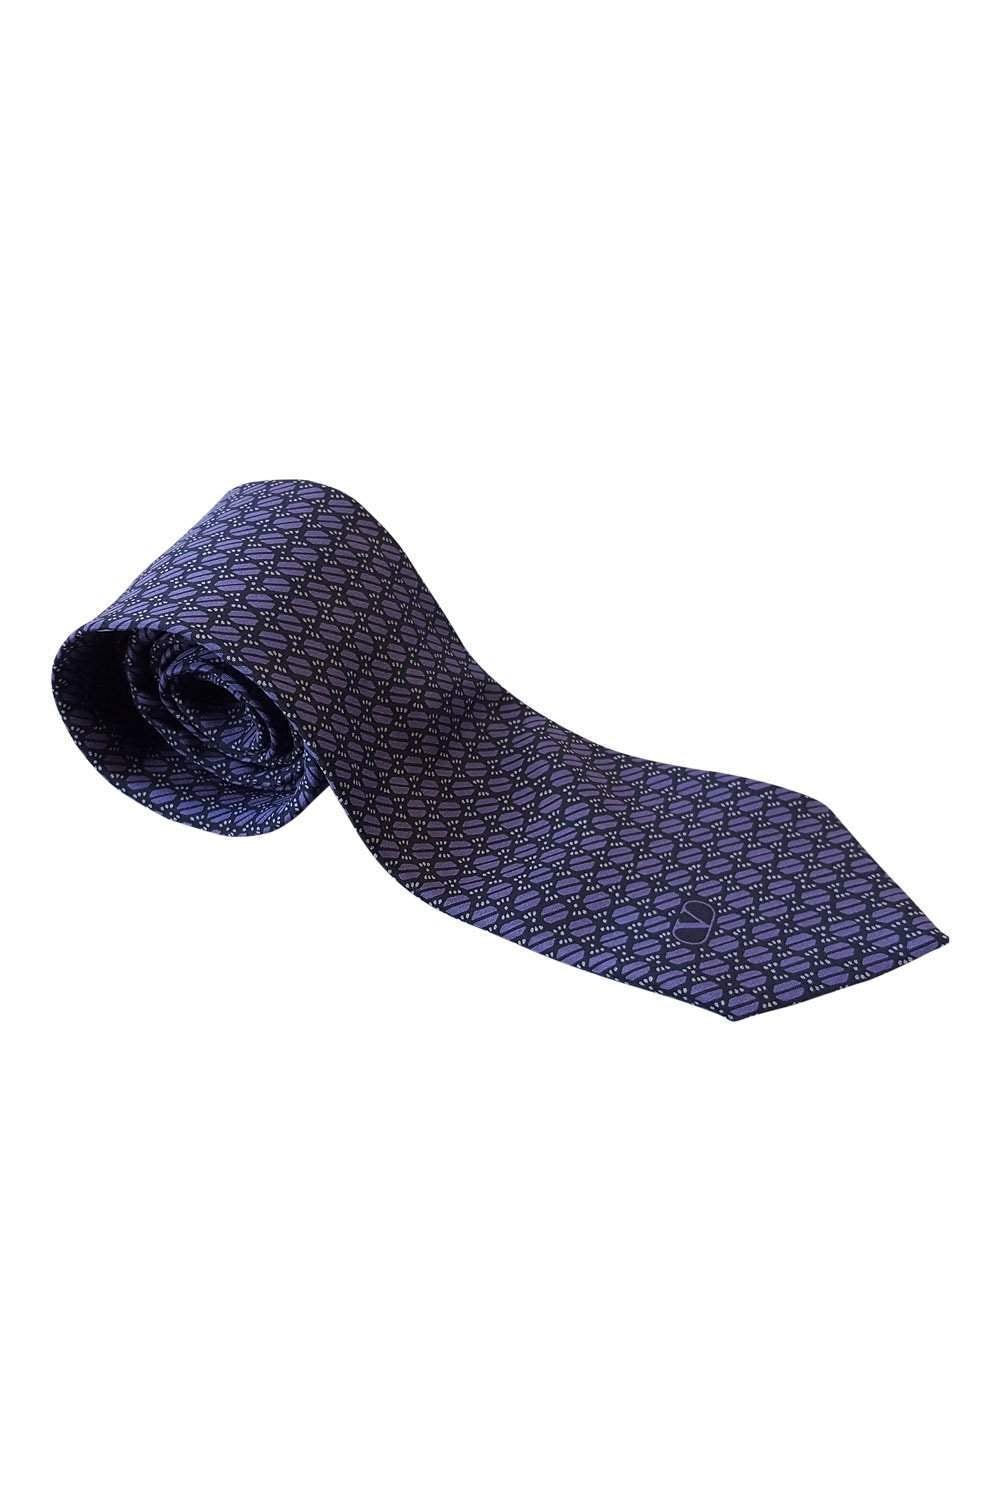 VALENTINO Vintage Silk Purple Geometric Print Tie-Valentino-The Freperie